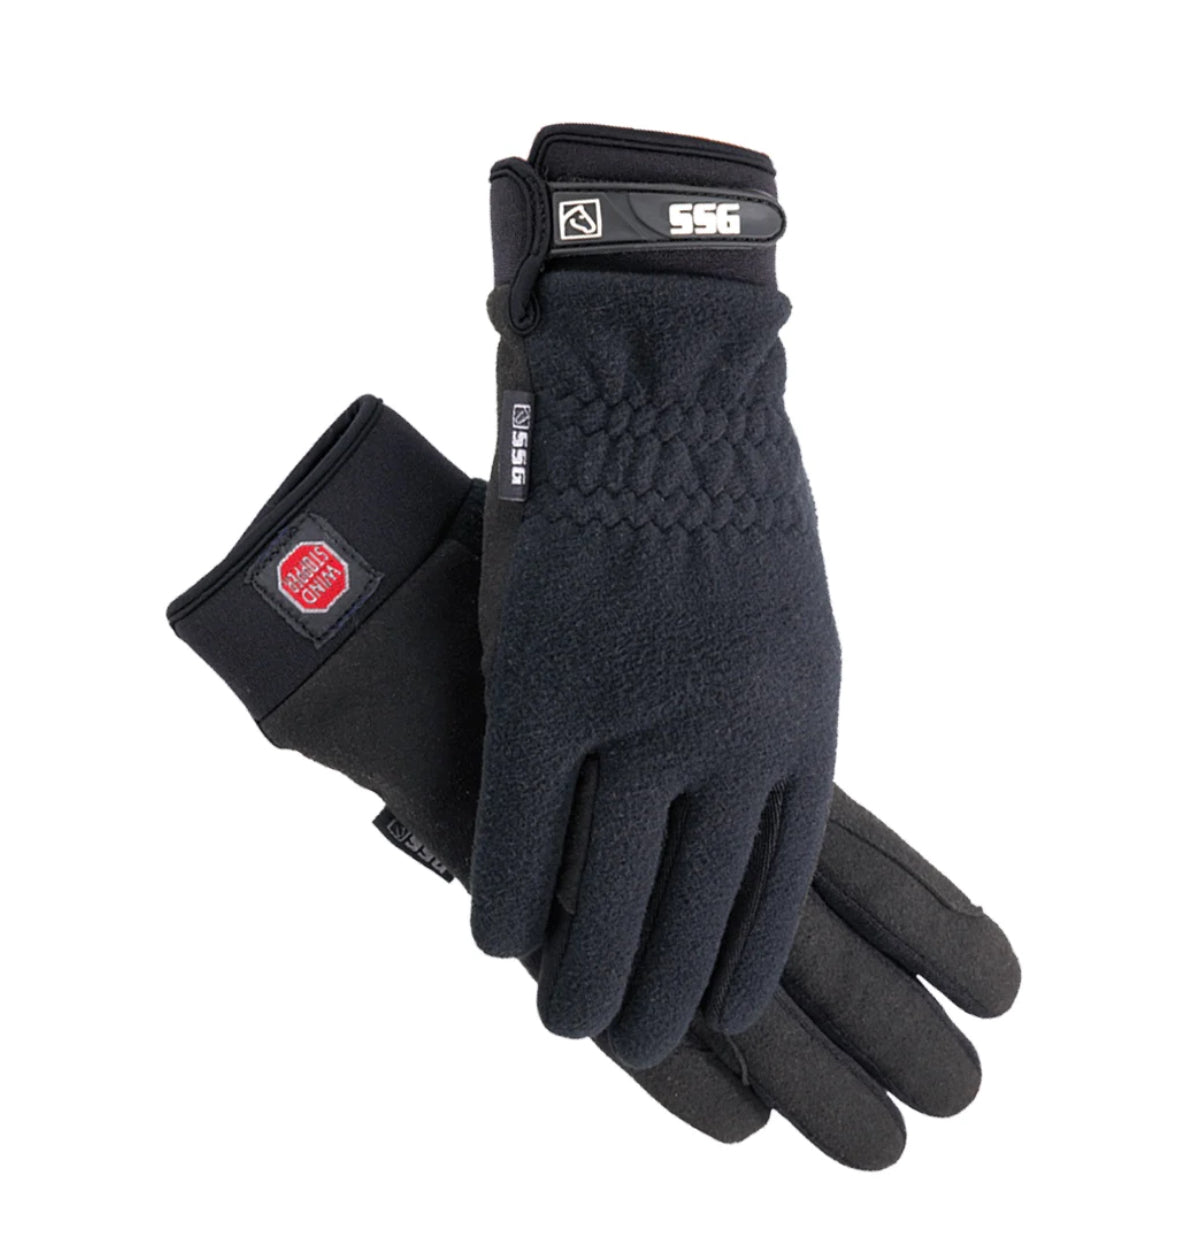 SSG Windstopper Winter Riding Gloves